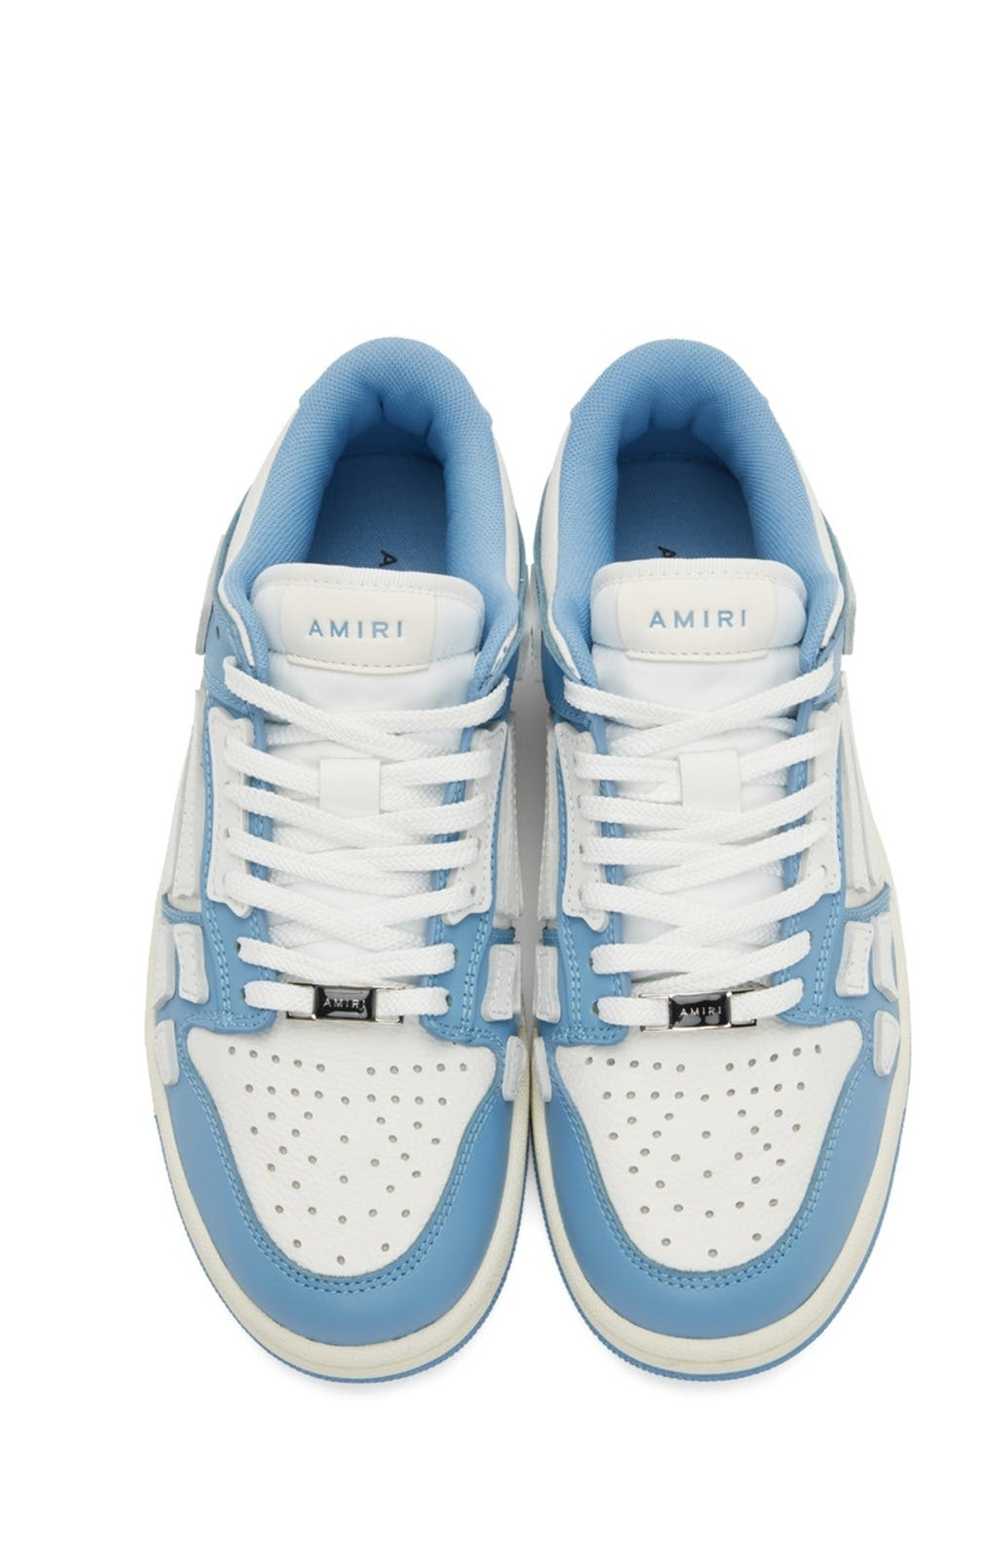 Amiri Amiri Skel Top Low 'Powder Blue & White’ - image 3